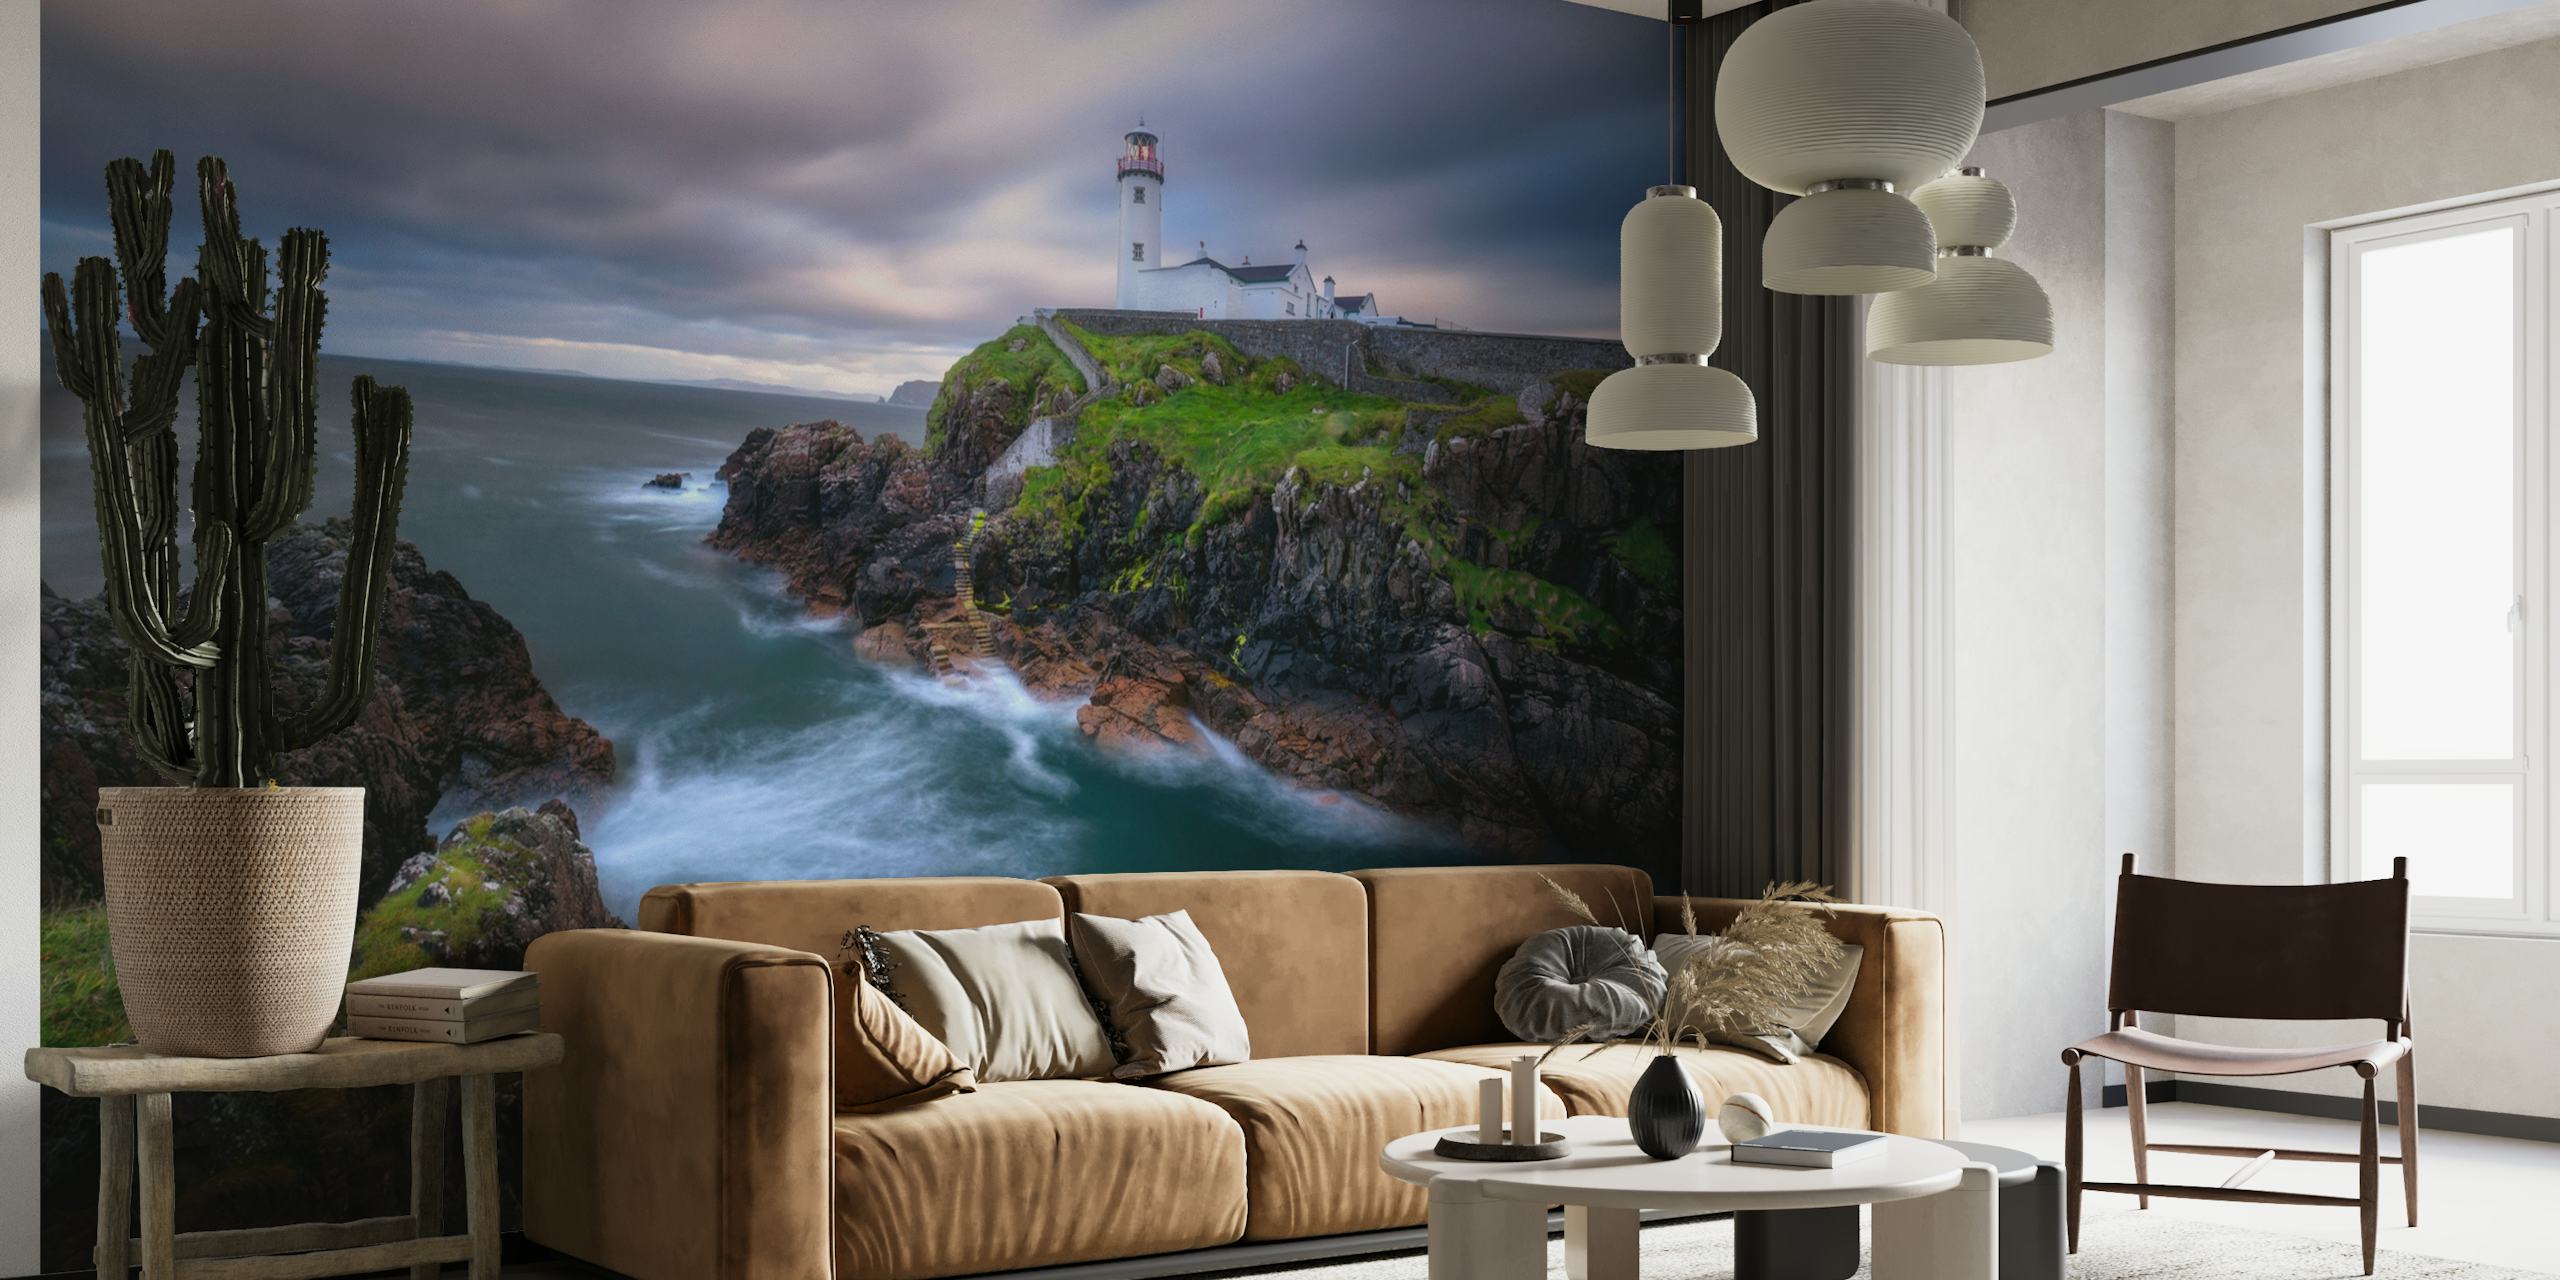 Fanad Head Lighthouse zidna slika s dramatičnim pogledom na nebo i Atlantski ocean